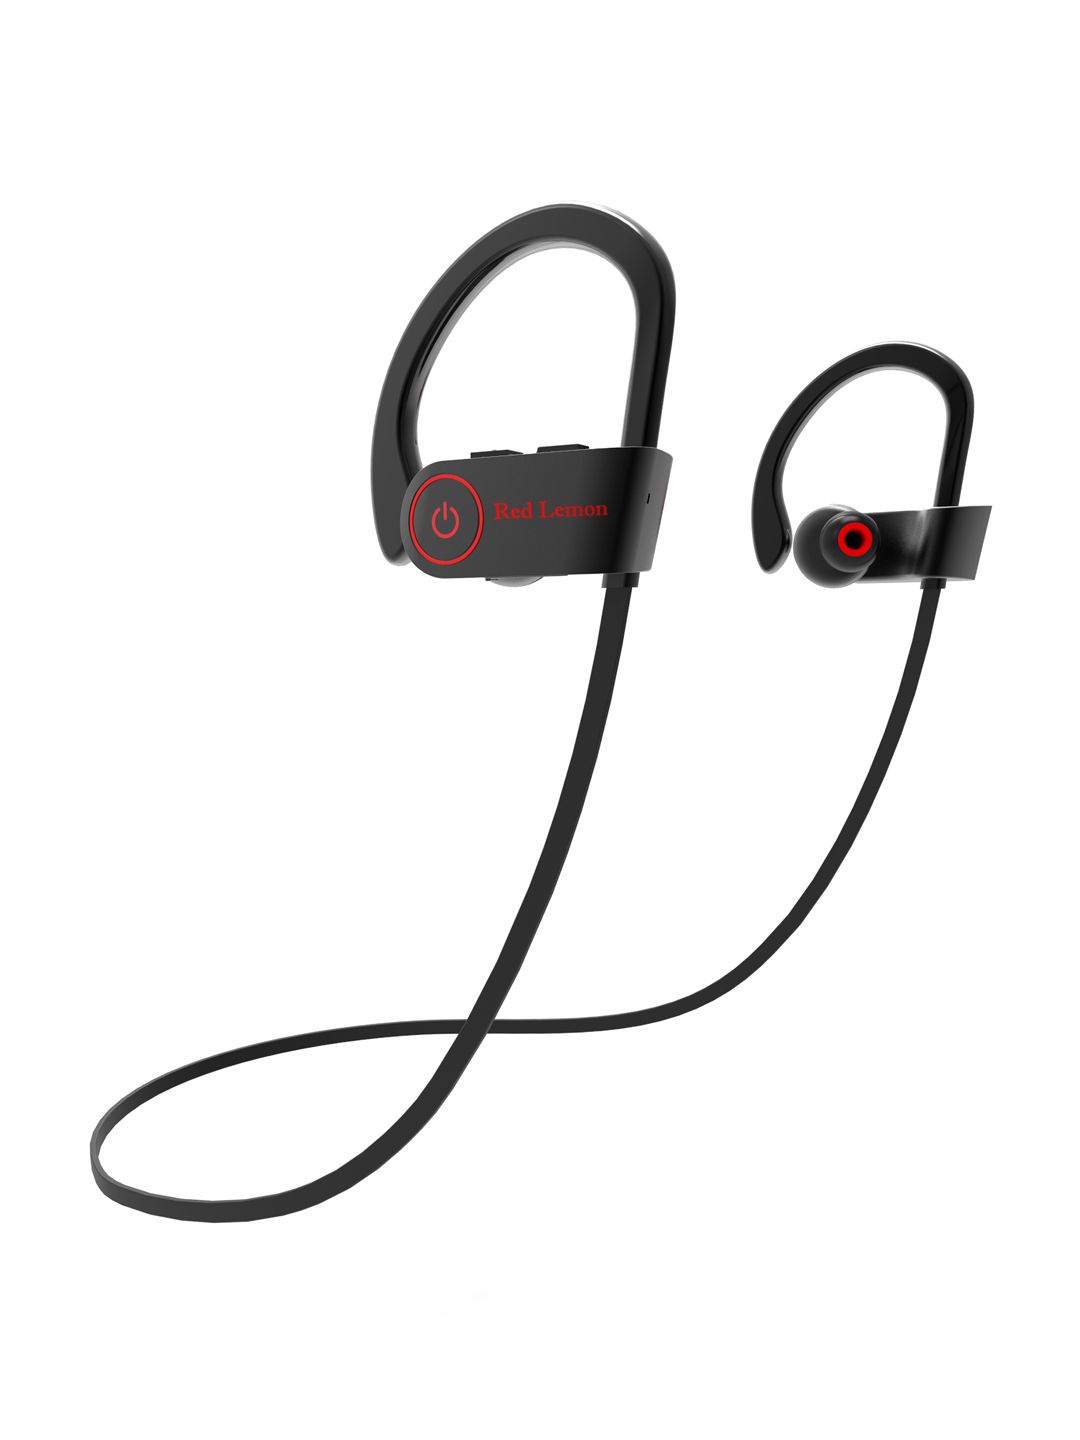 Red Lemon Black Bolt S180 Sports Stereo Wireless Headphone Price in India